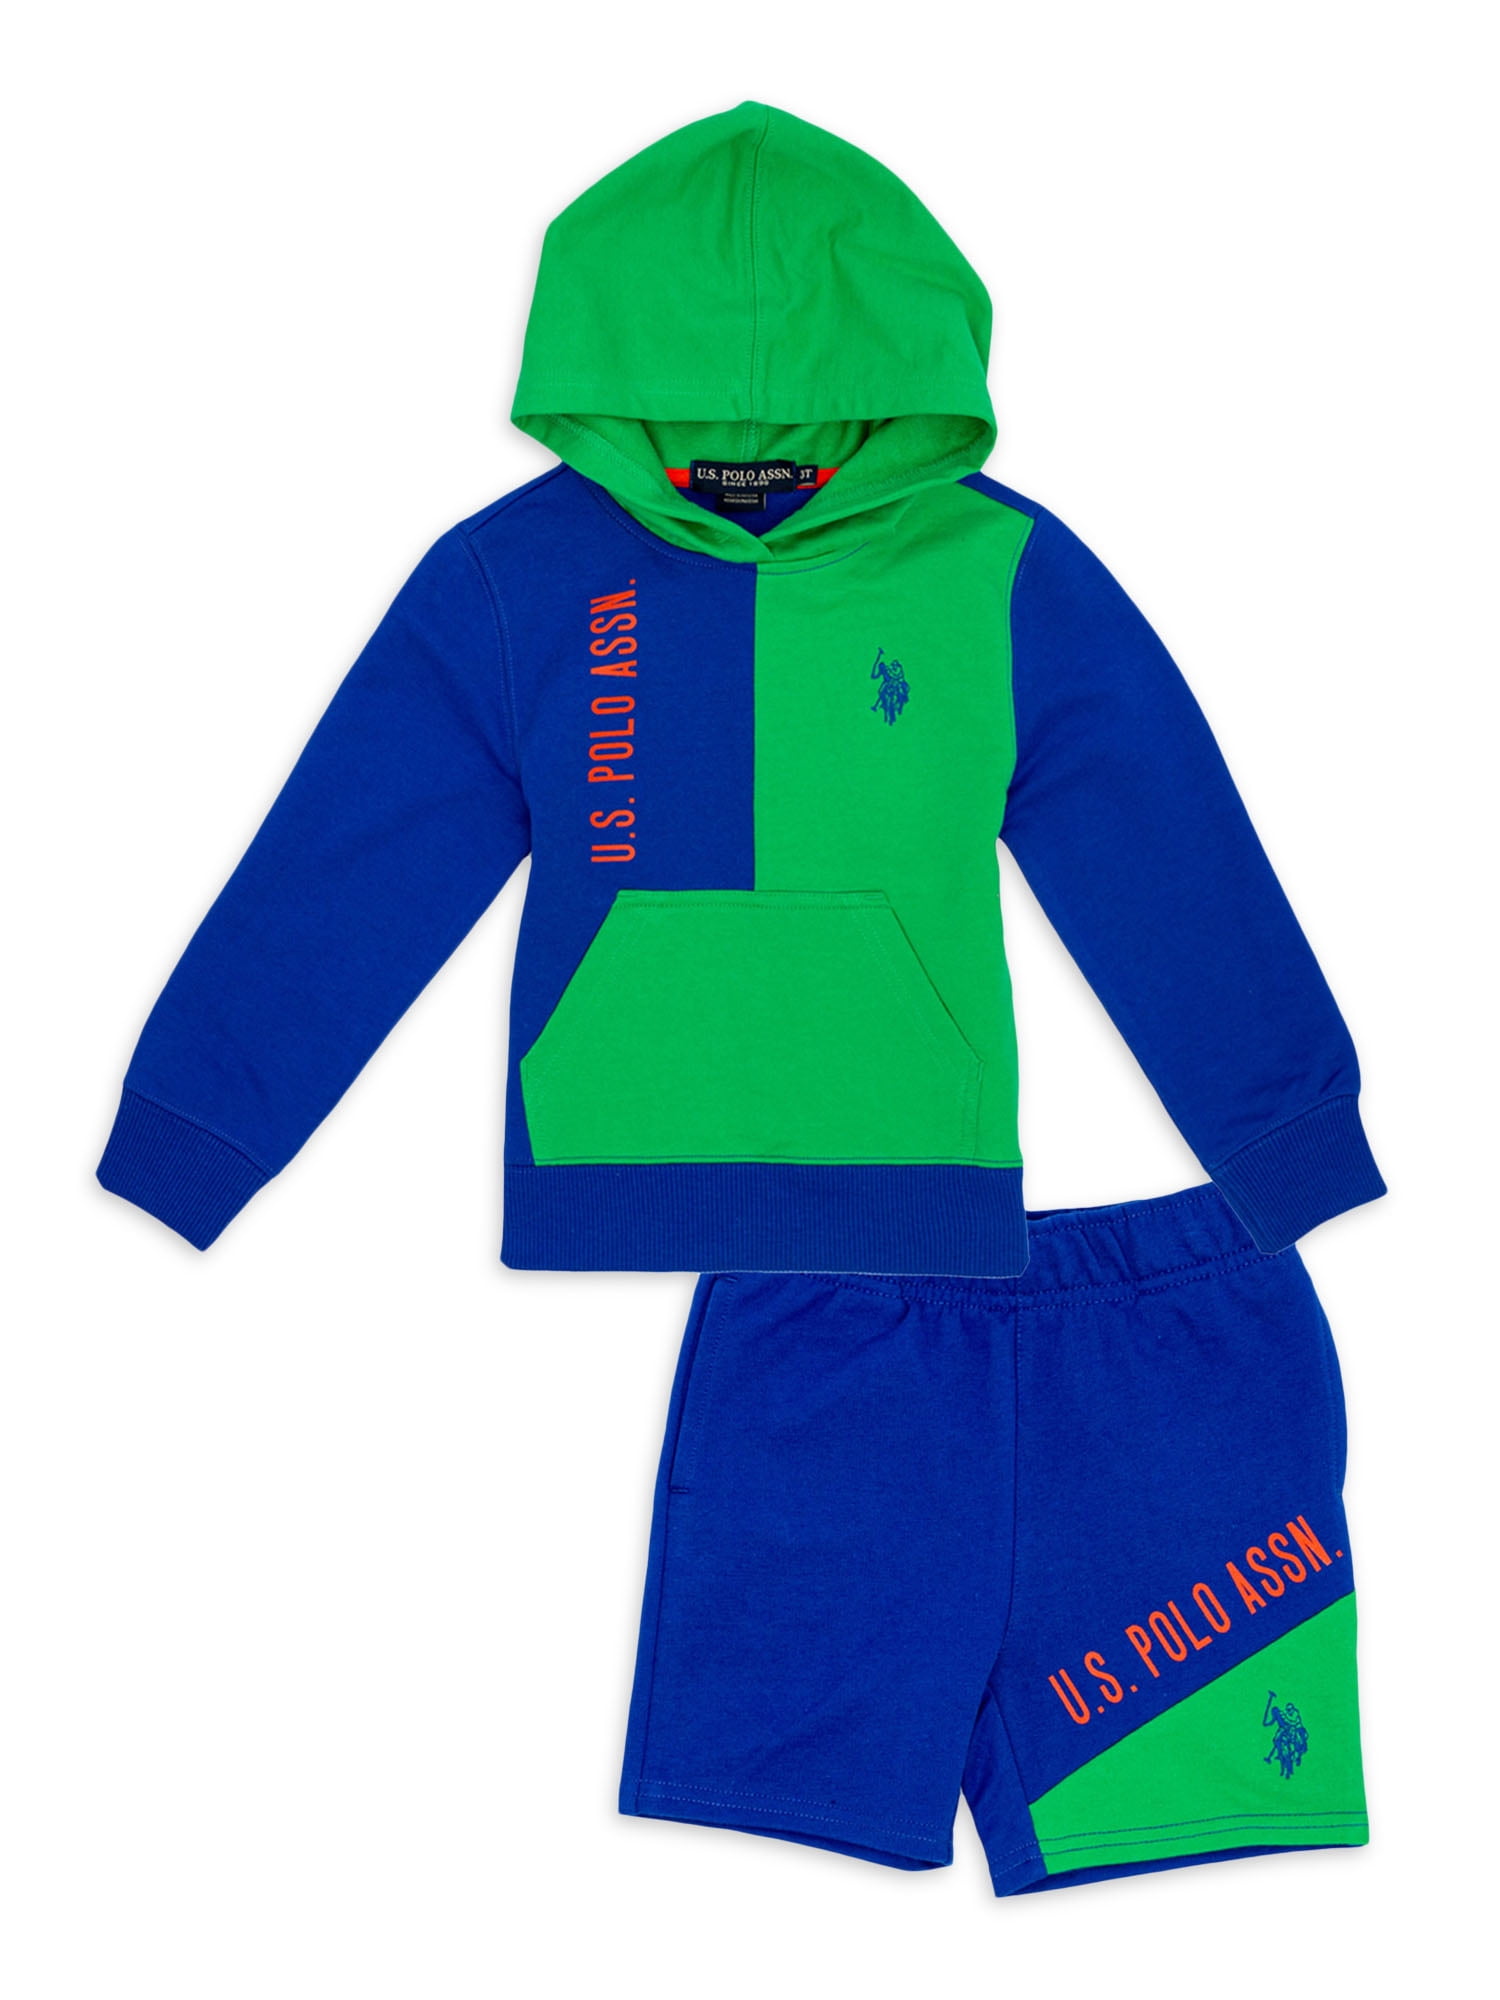 U.S. Polo Assn. Toddler Boy Colorblock Fleece Hoodie & Outfit Set, 2 ...